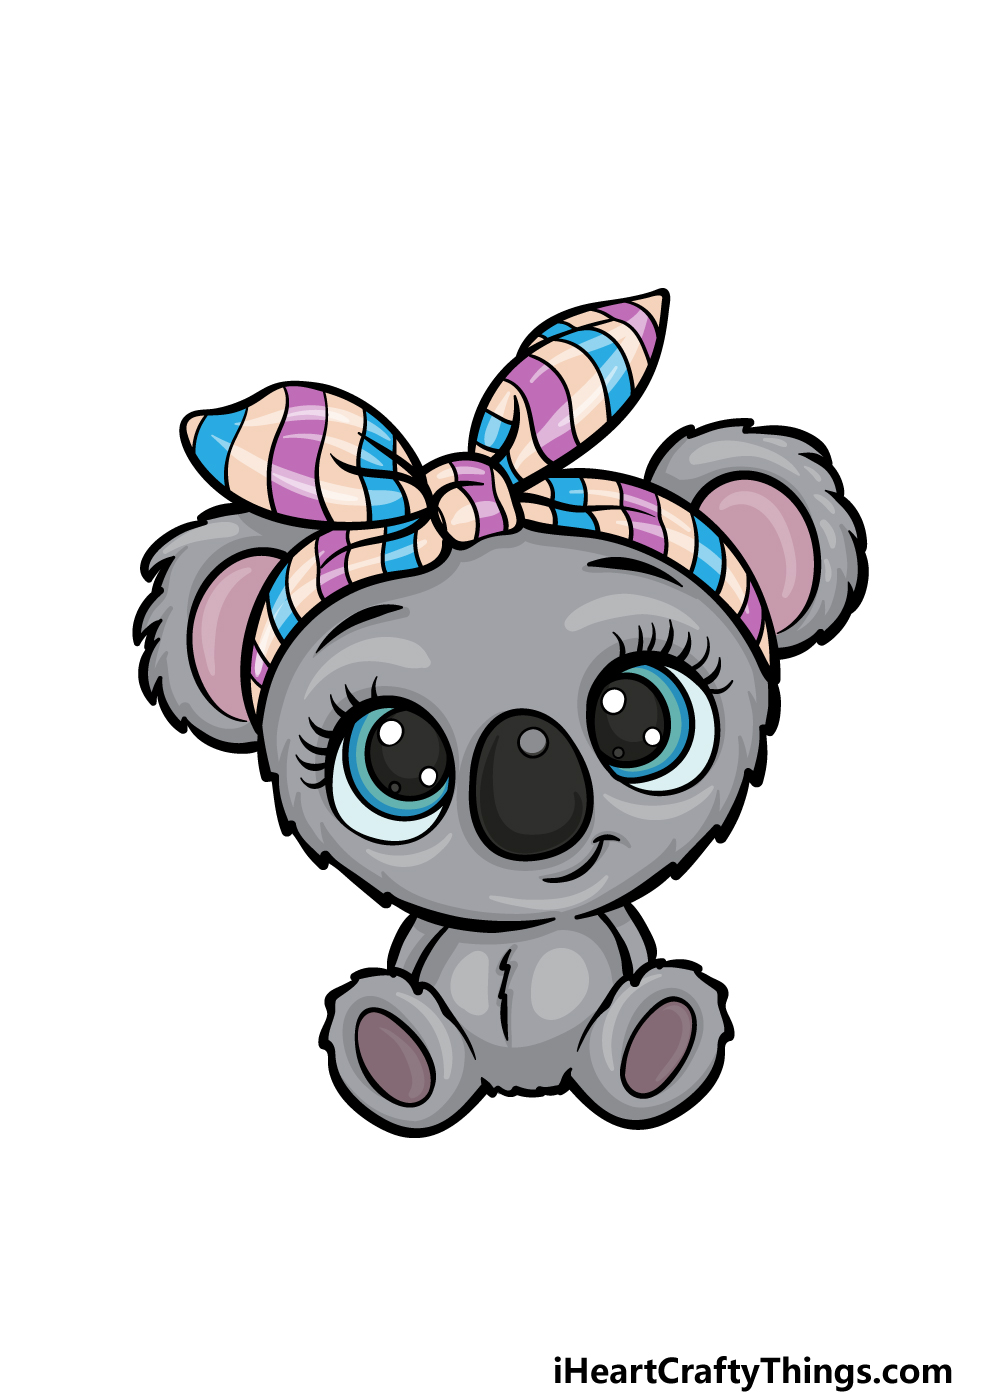 Cute Koala Drawing - How To Draw A Cute Koala Step By Step